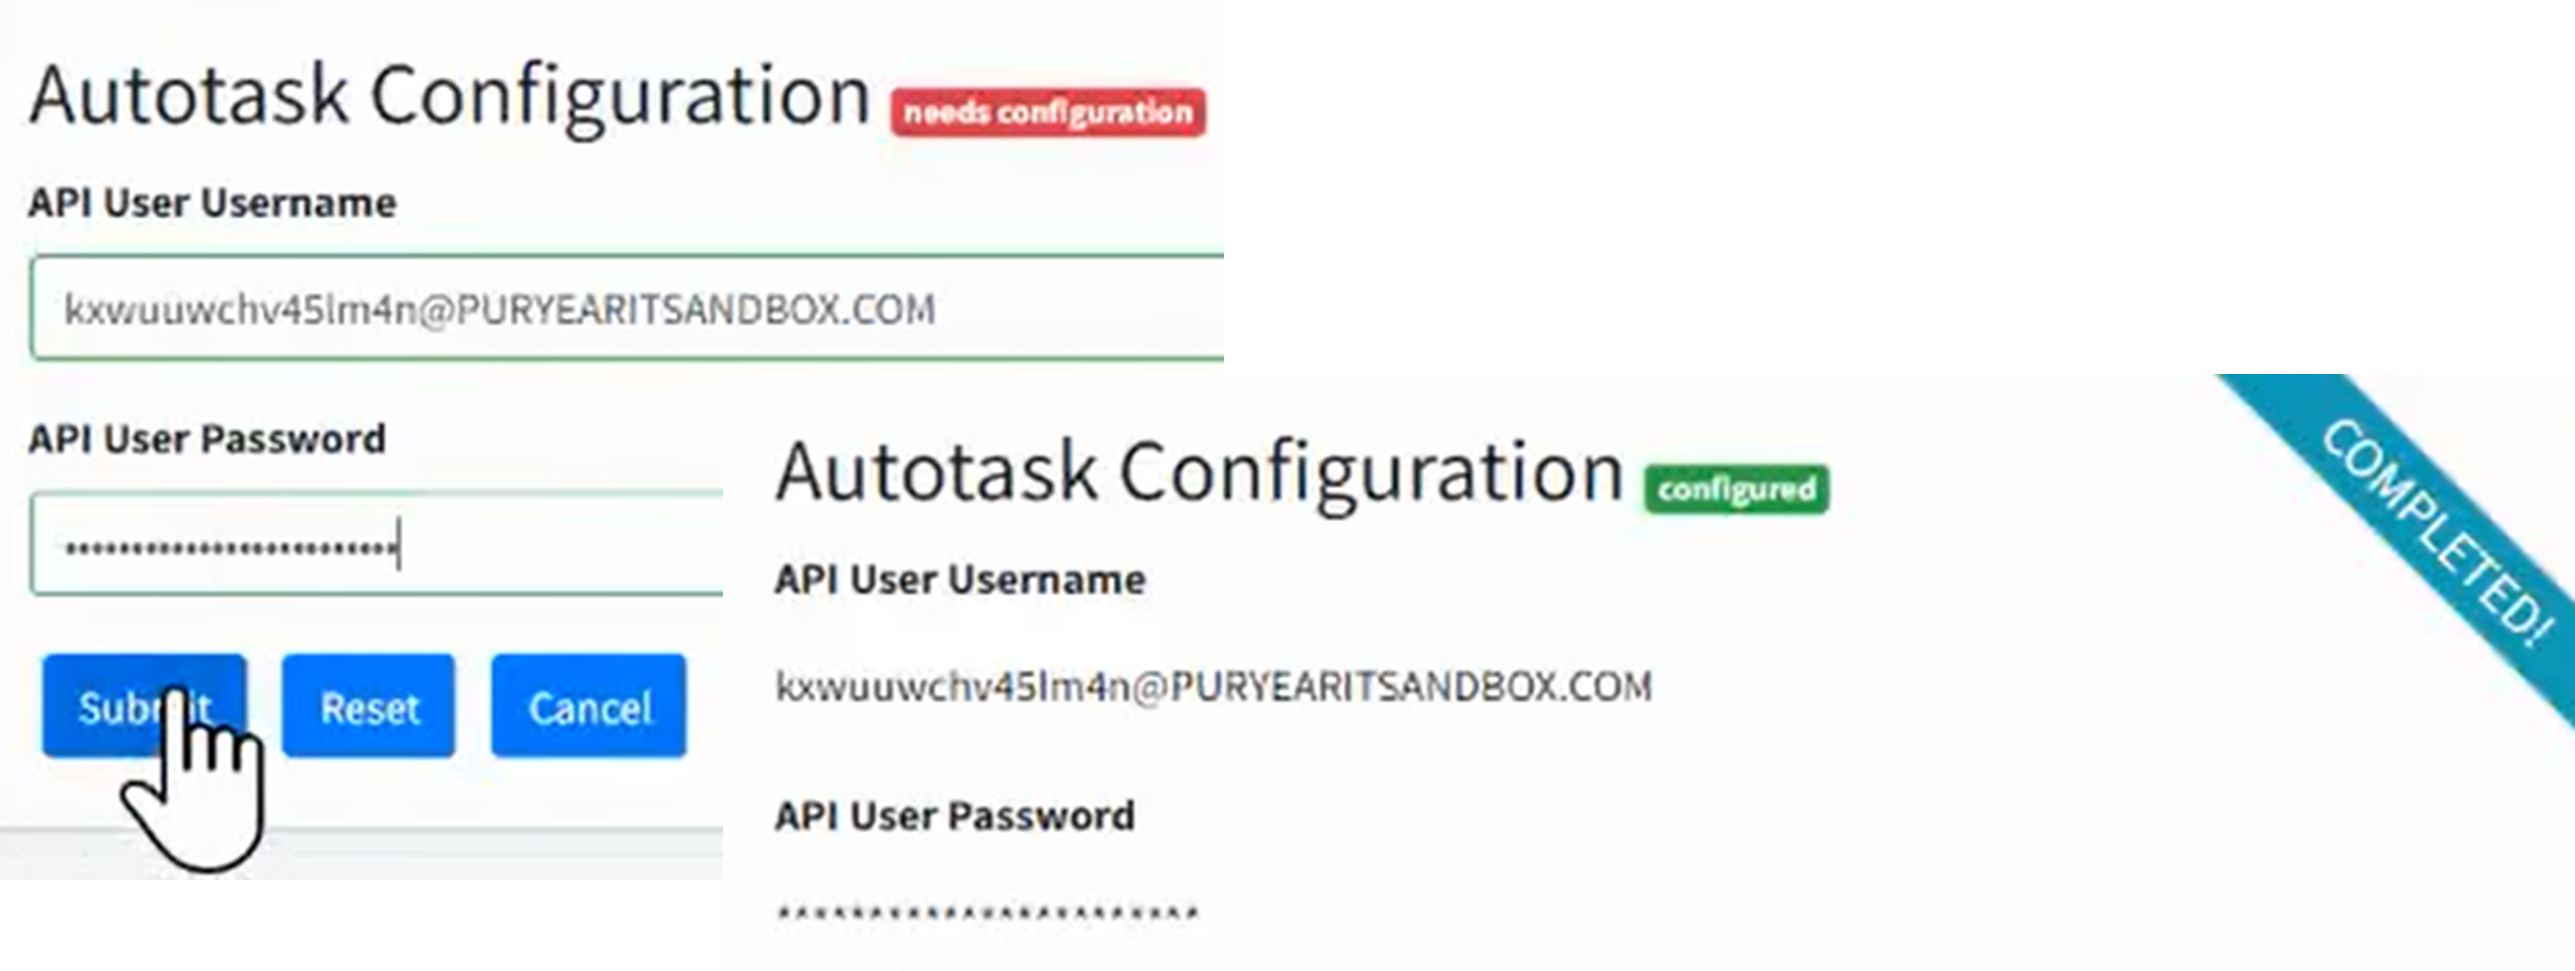 Autotask Configuration